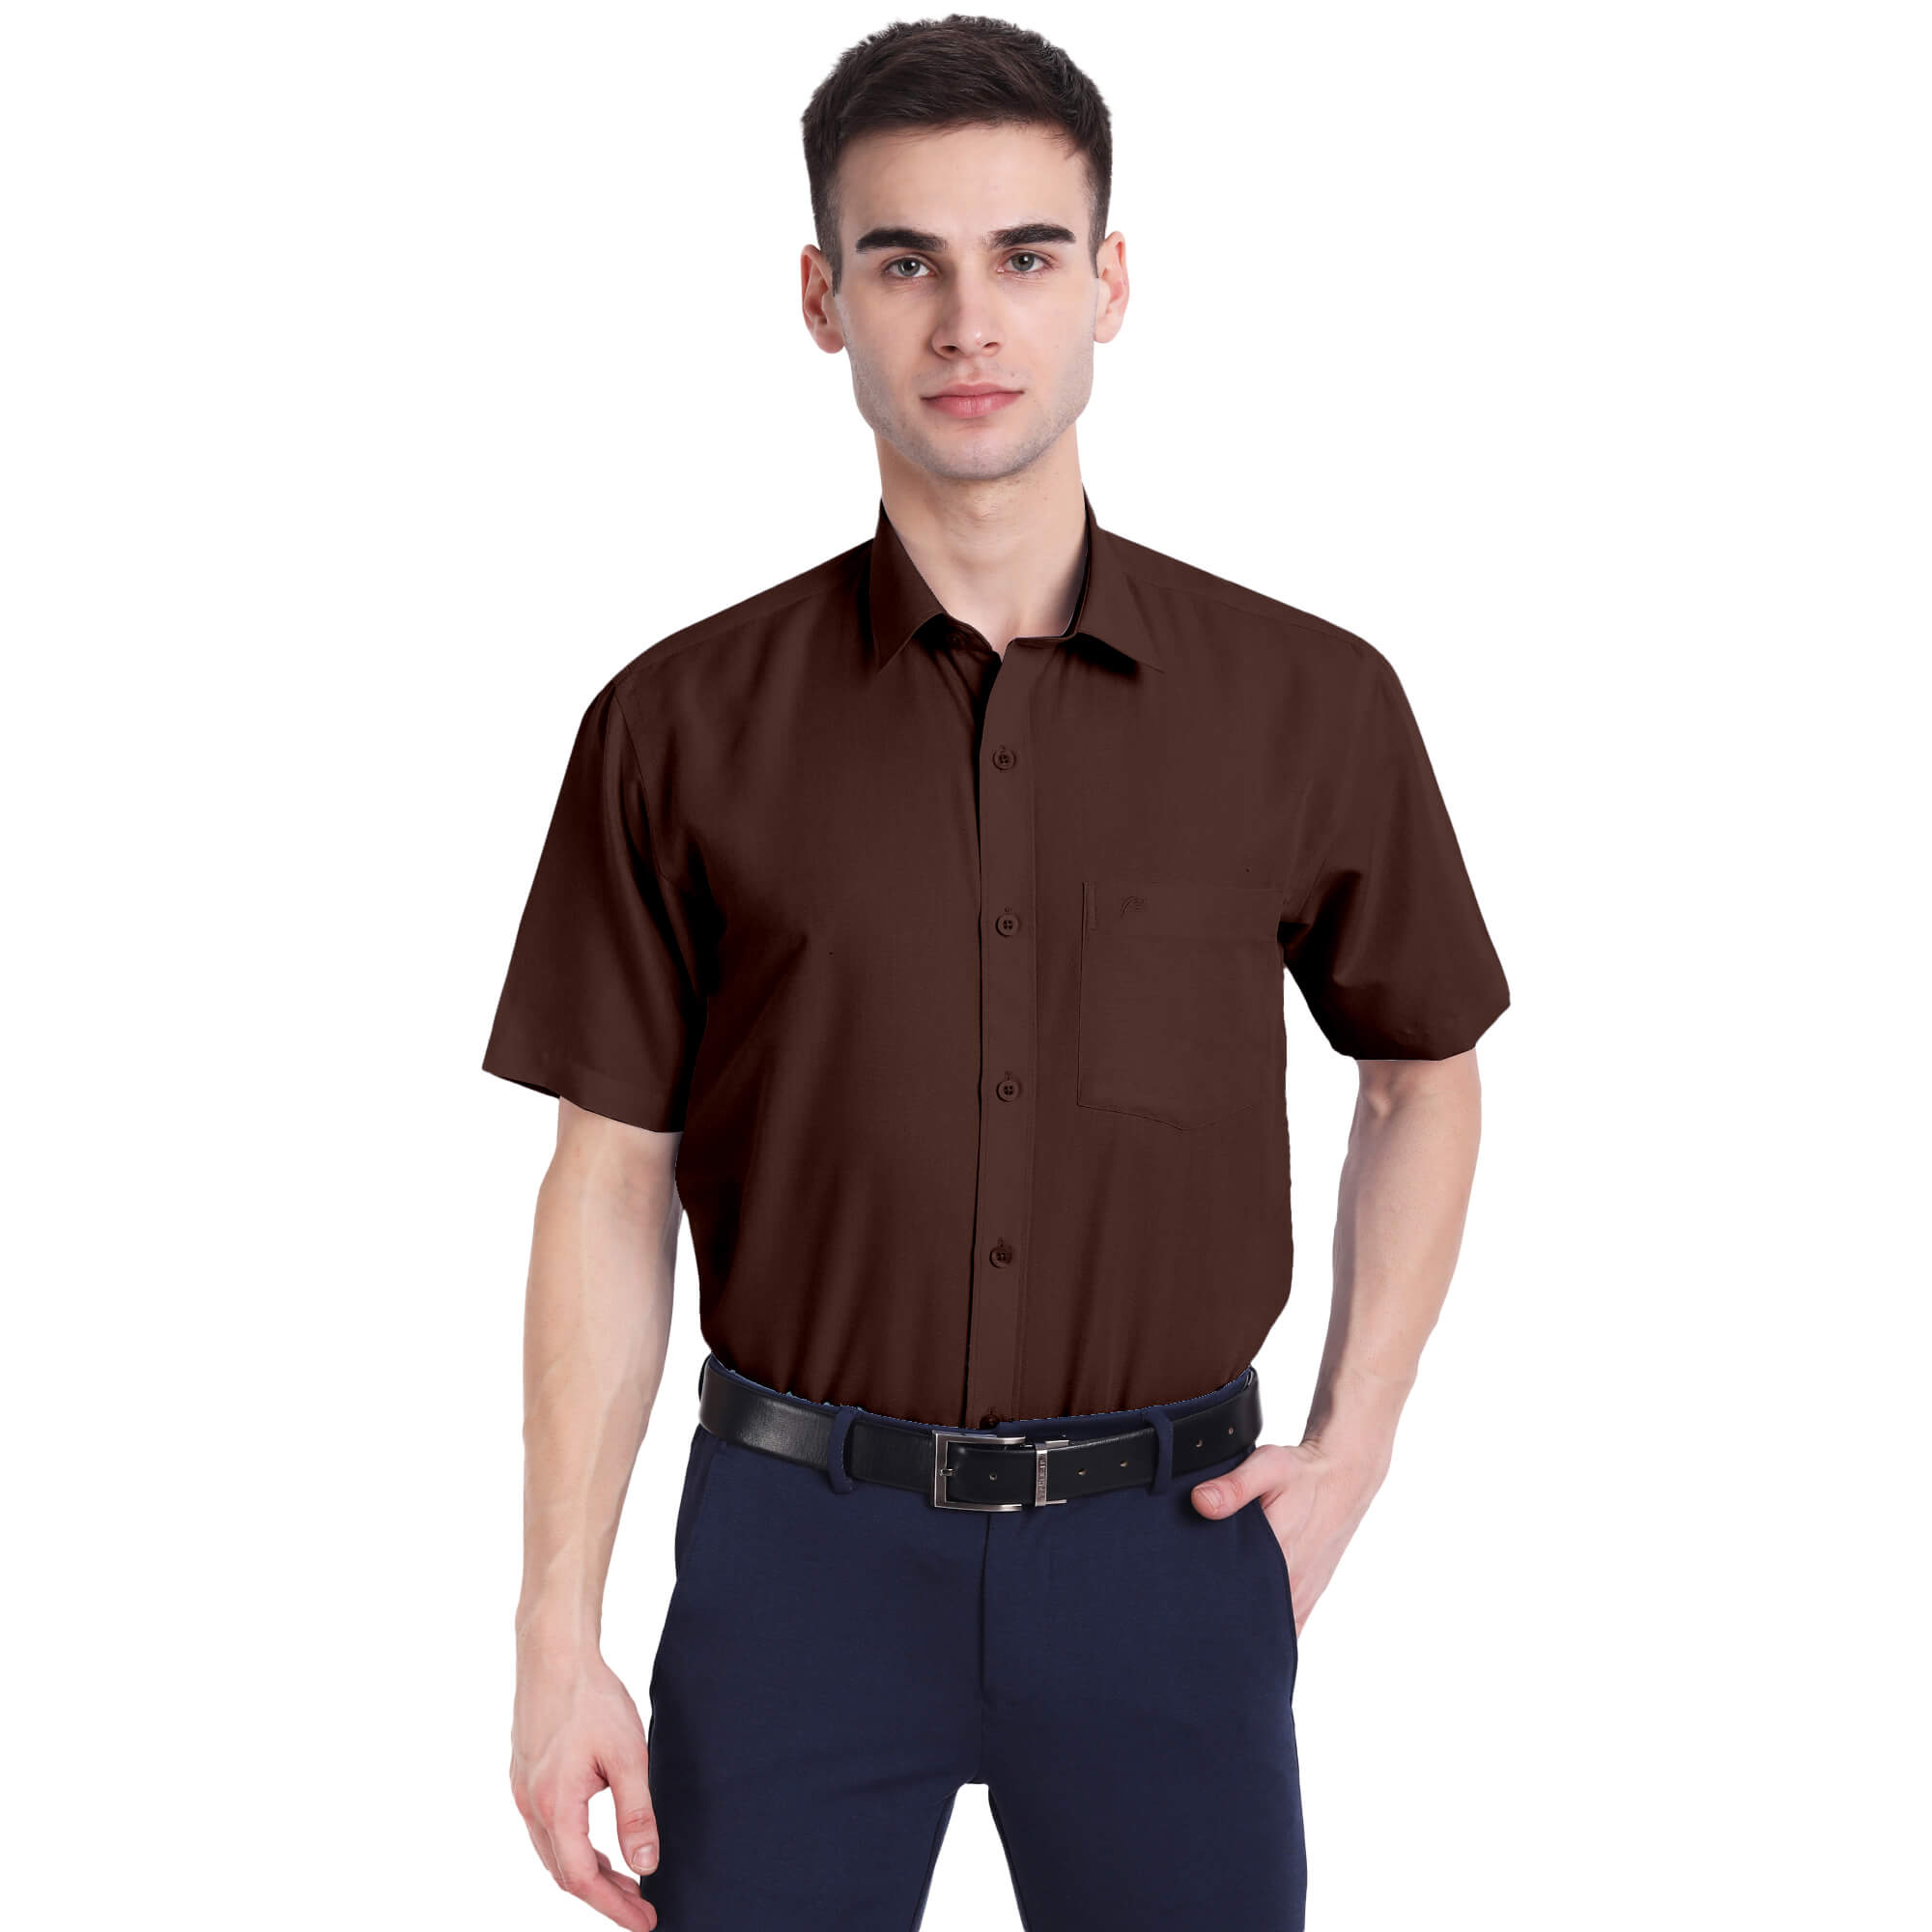 Poomer Elite Colour Shirt - Coffee Brown